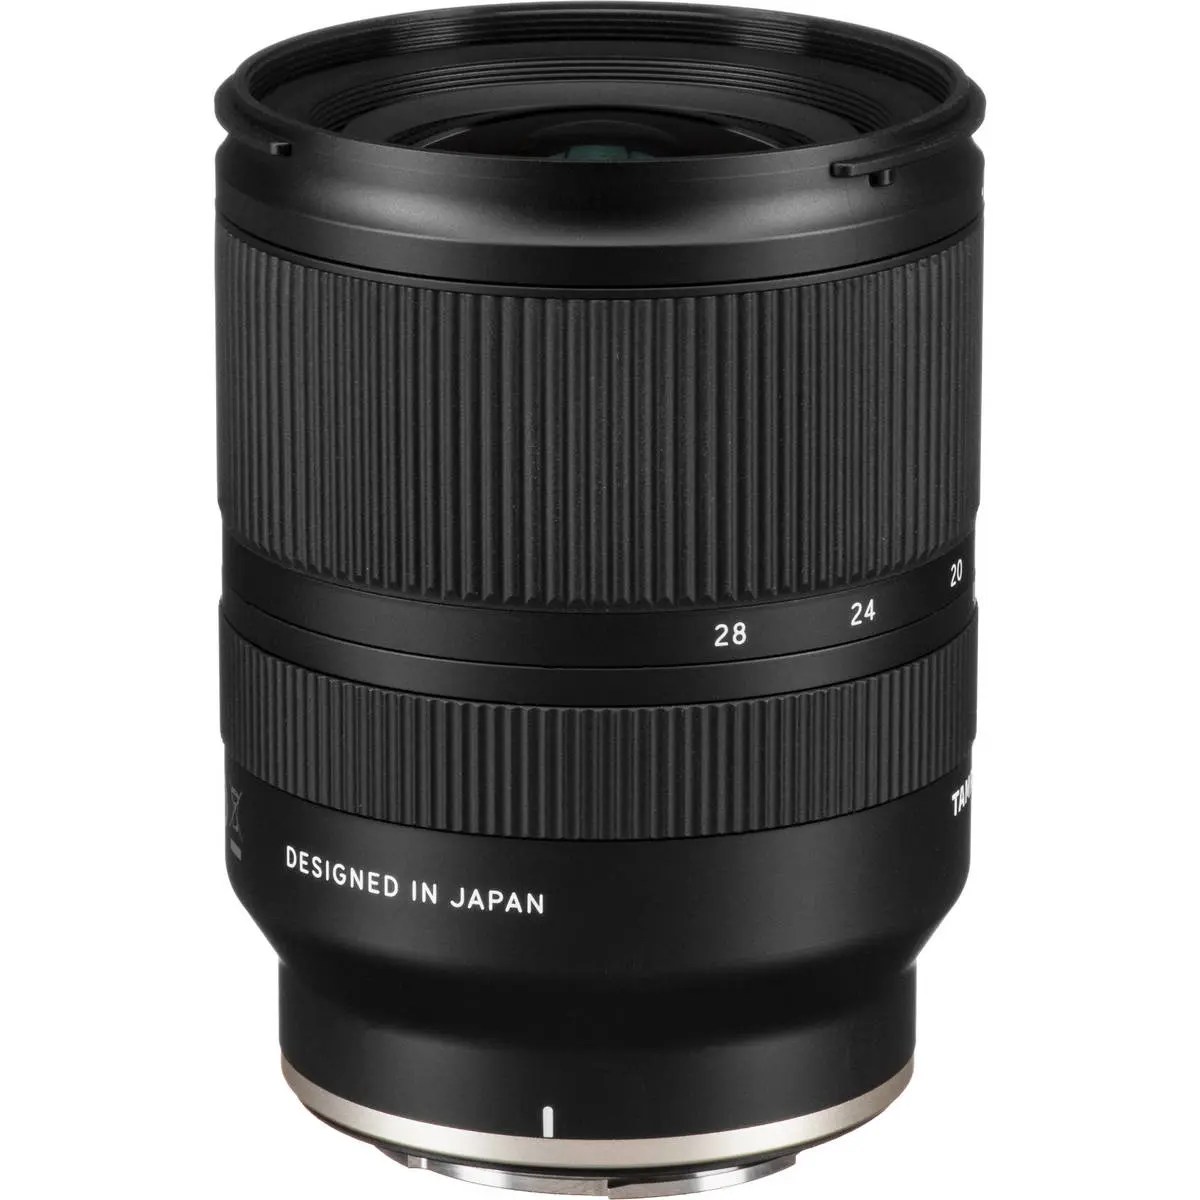 3. Tamron 17-28mm f/2.8 Di III RXD (A046) Sony E Lens